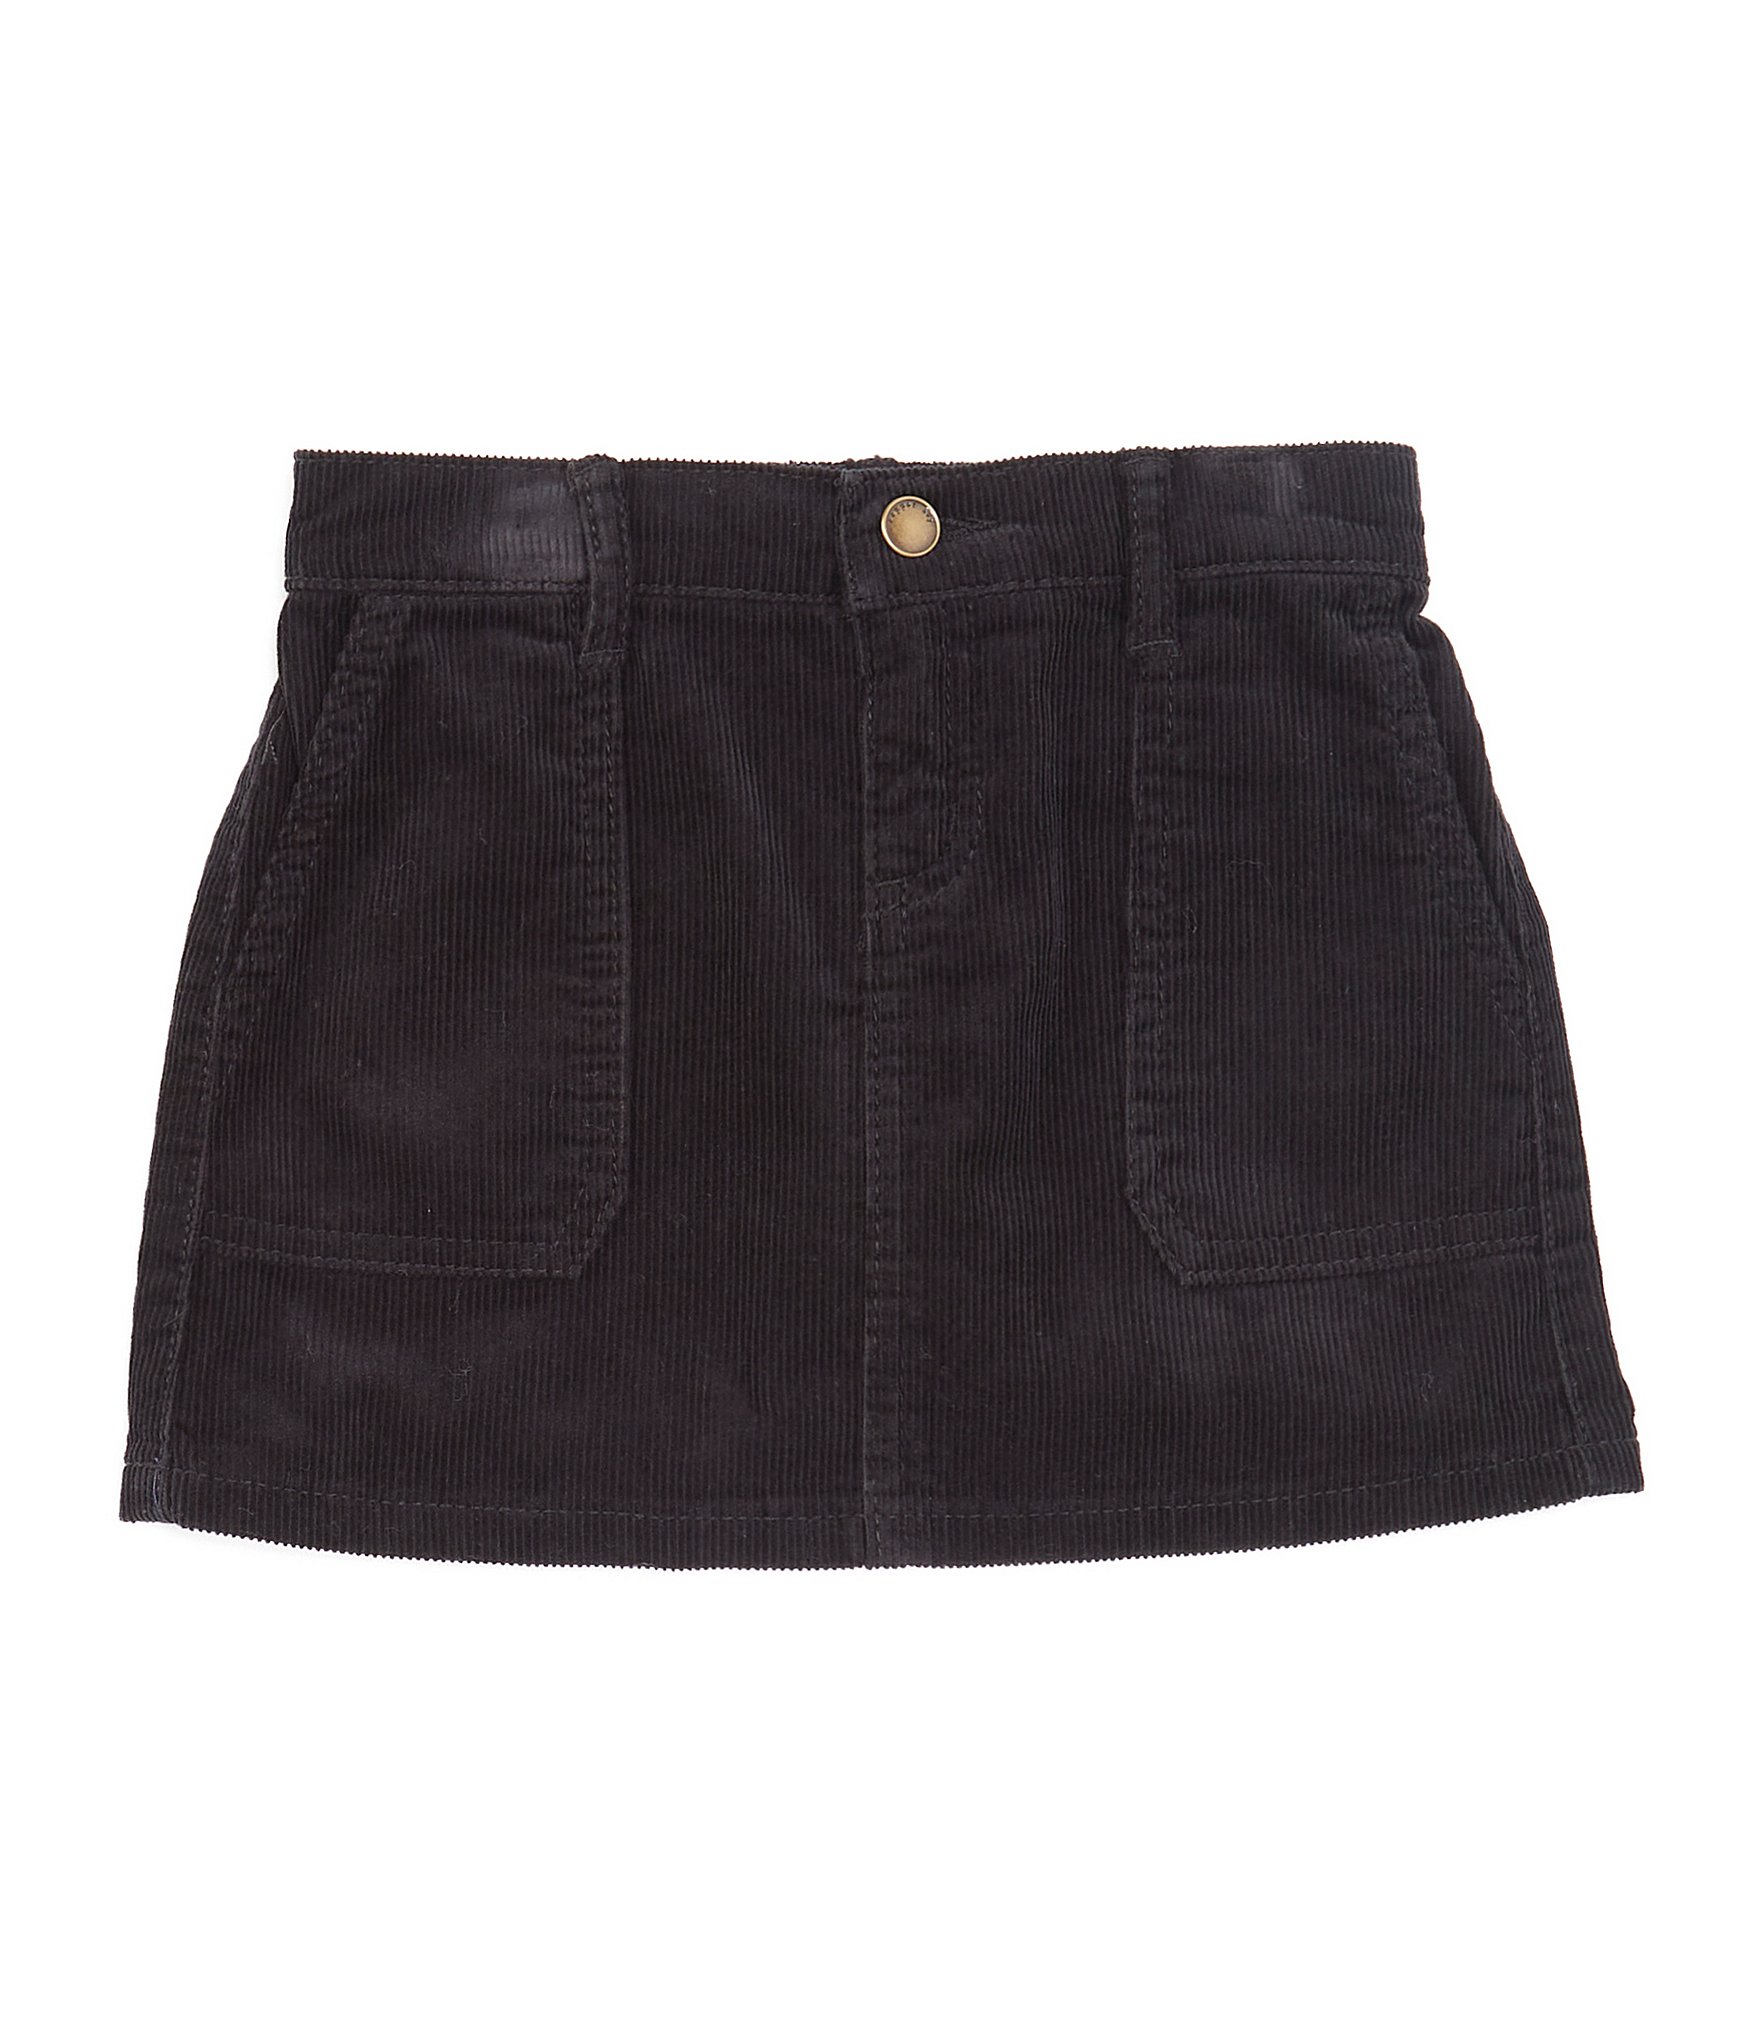 Copper Key Little Girls 2T-6X Pocket Skirt | Dillard's